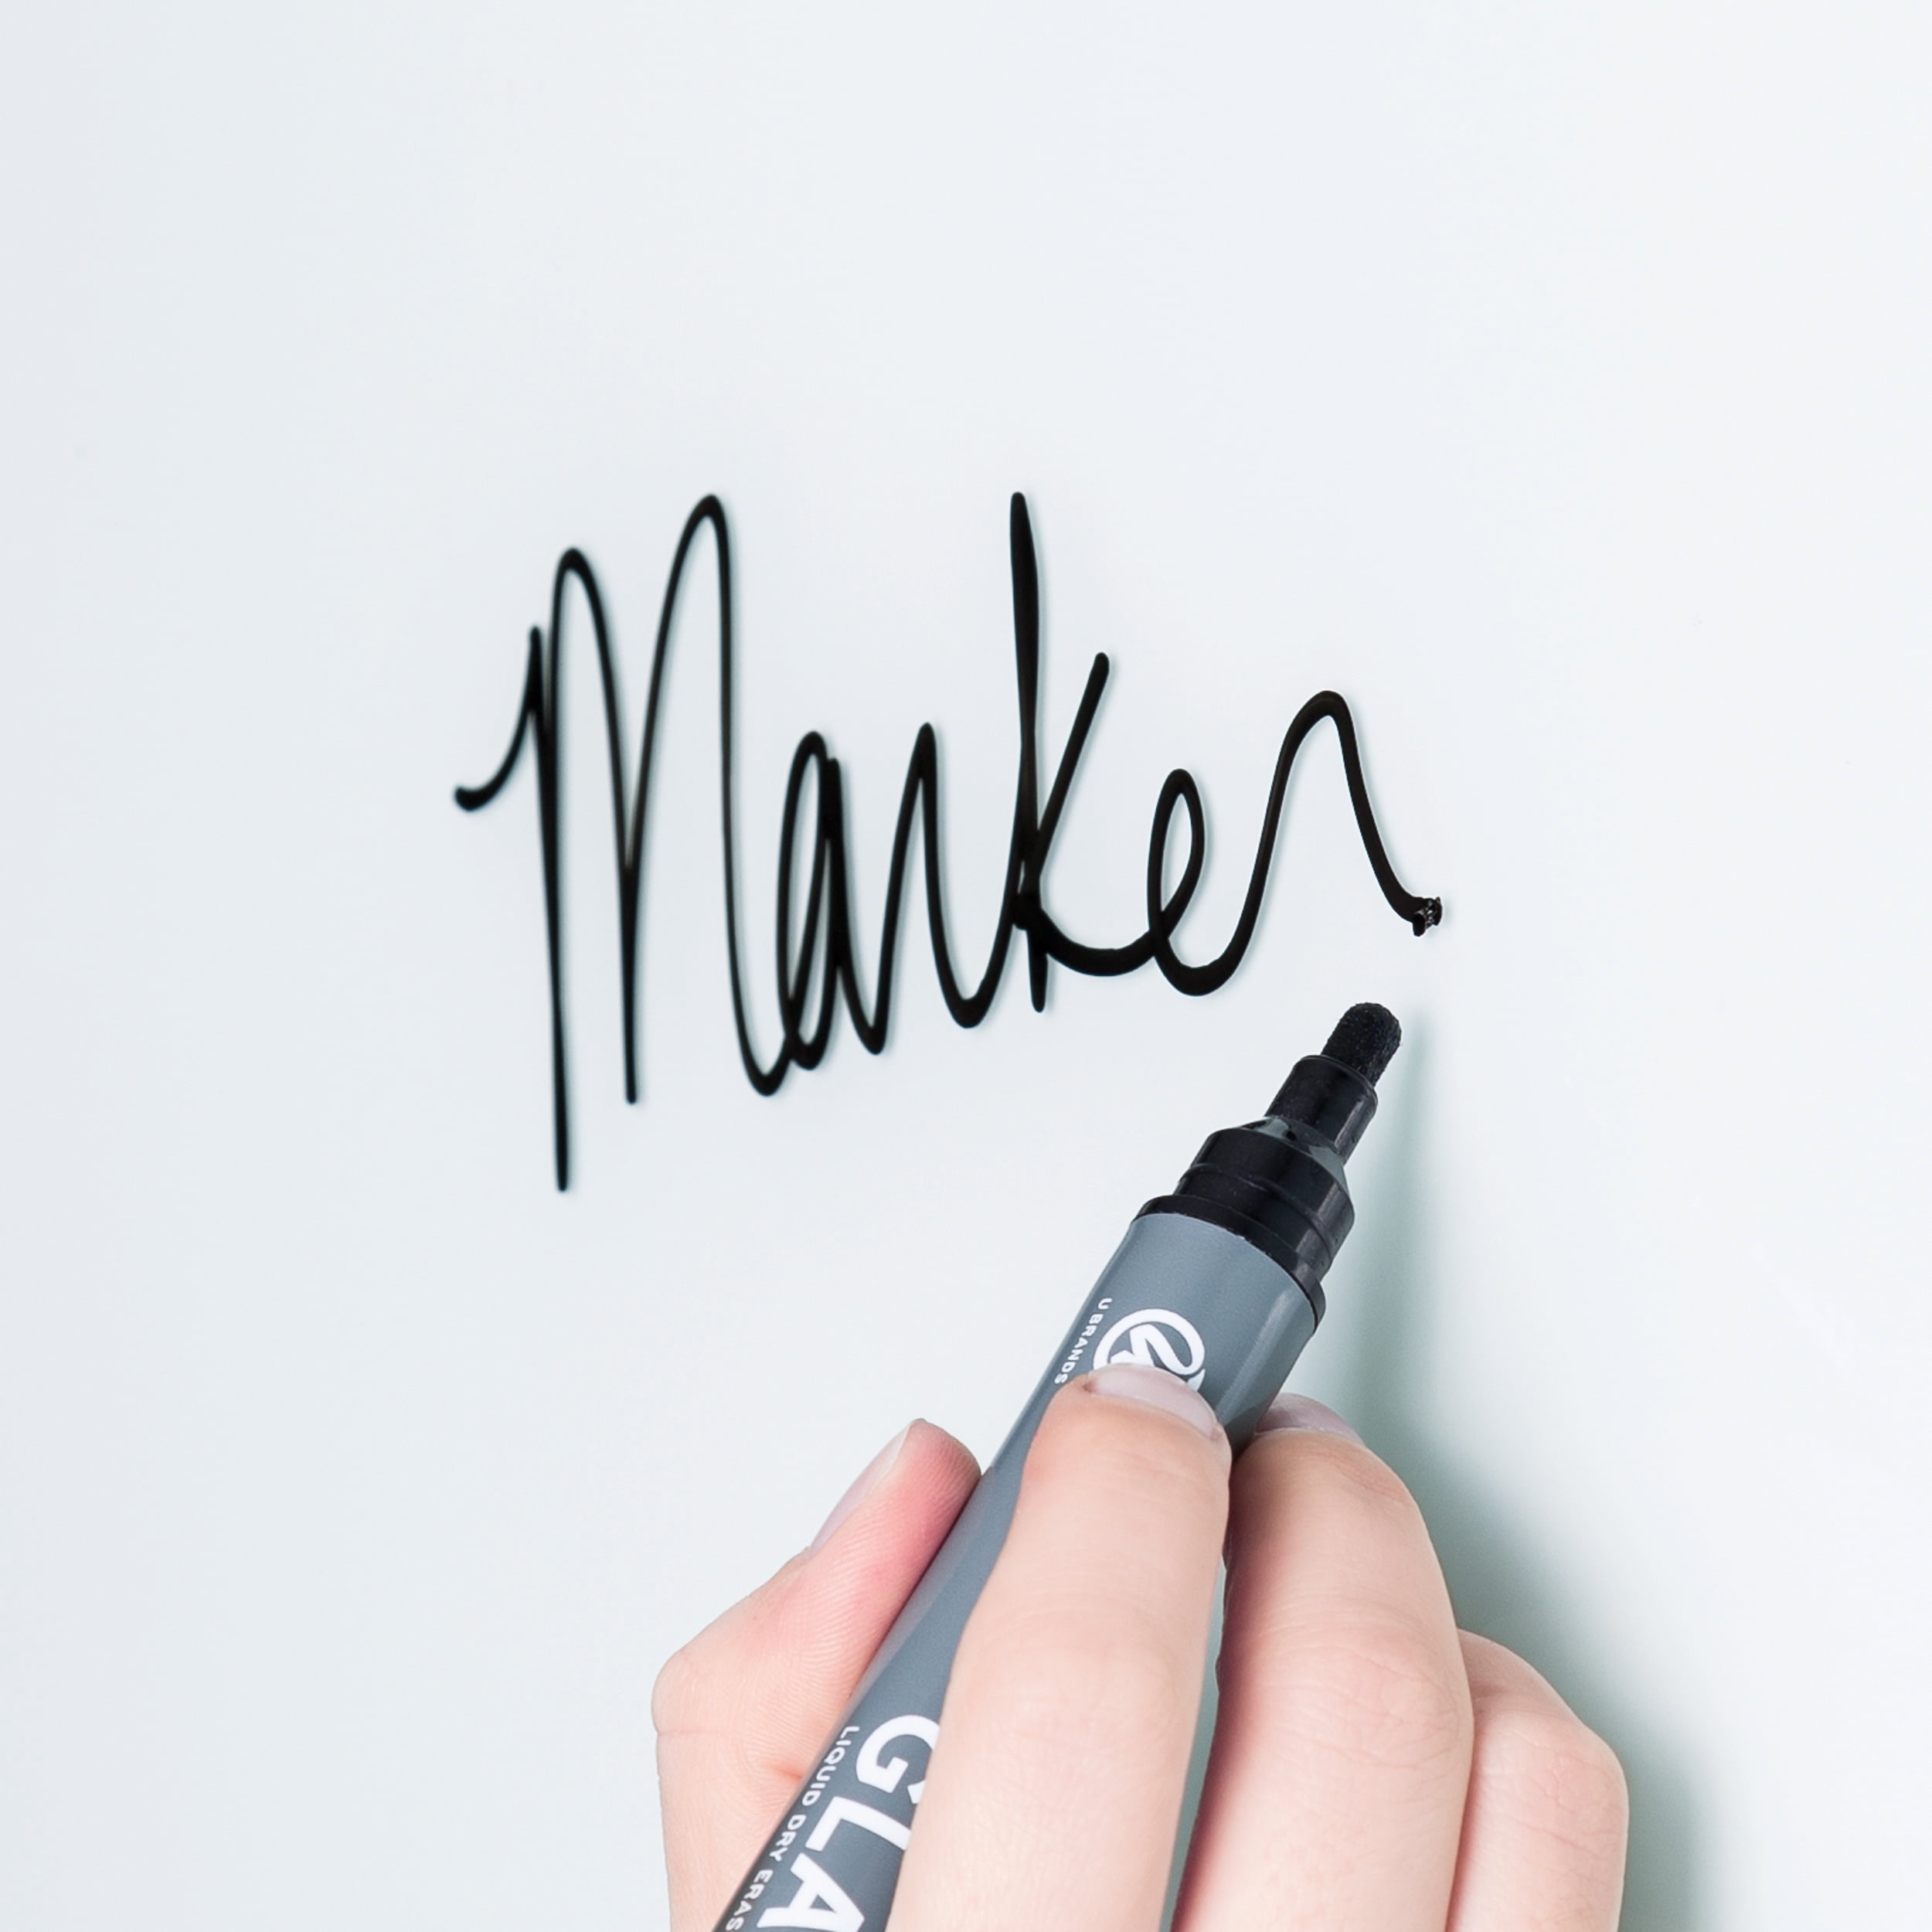 U Brands Liquid Chalk Dry Erase Markers Bullet Tip Assorted Colors